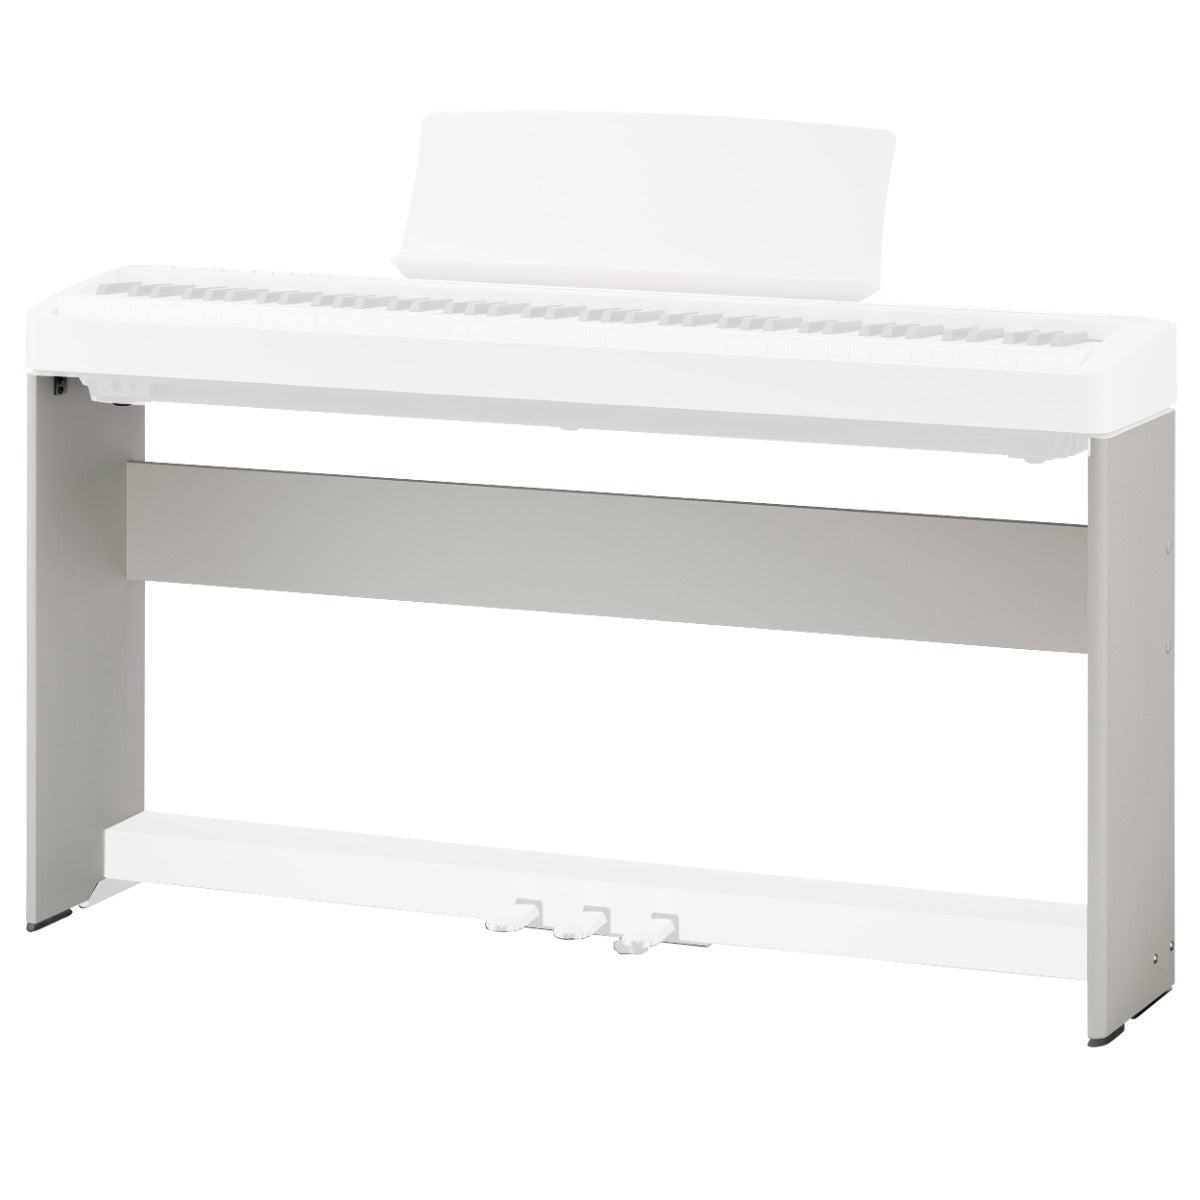 Kawai HML-2 Furniture-Style Stand - Light Grey